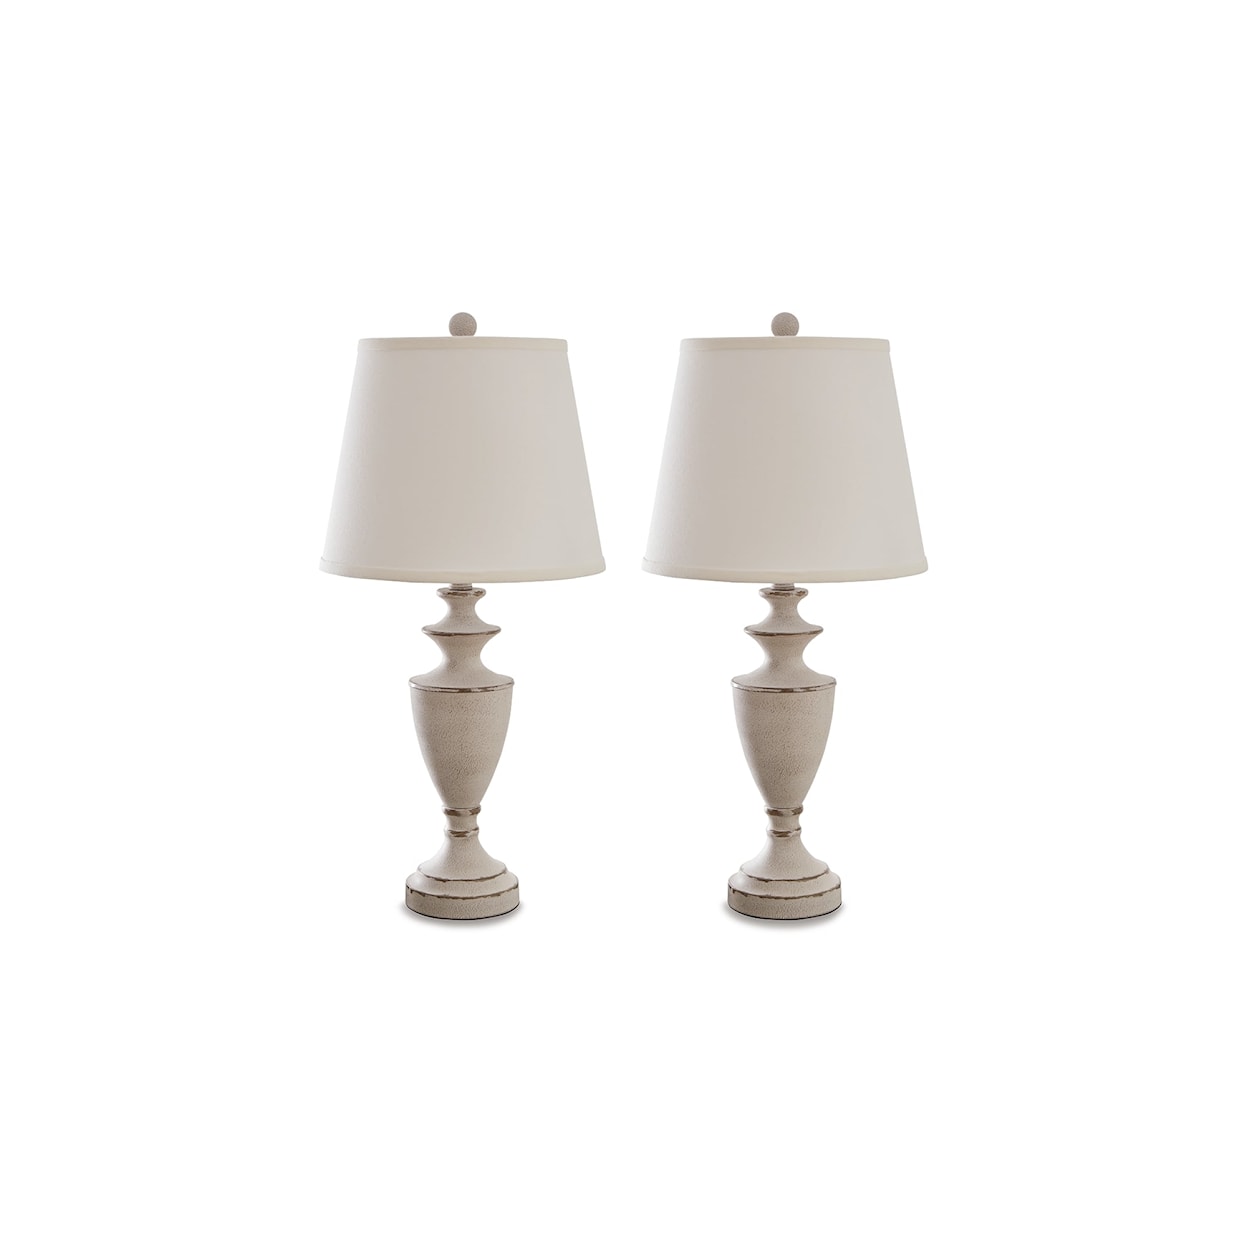 Ashley Furniture Signature Design Dorcher Metal Table Lamp (Set of 2)